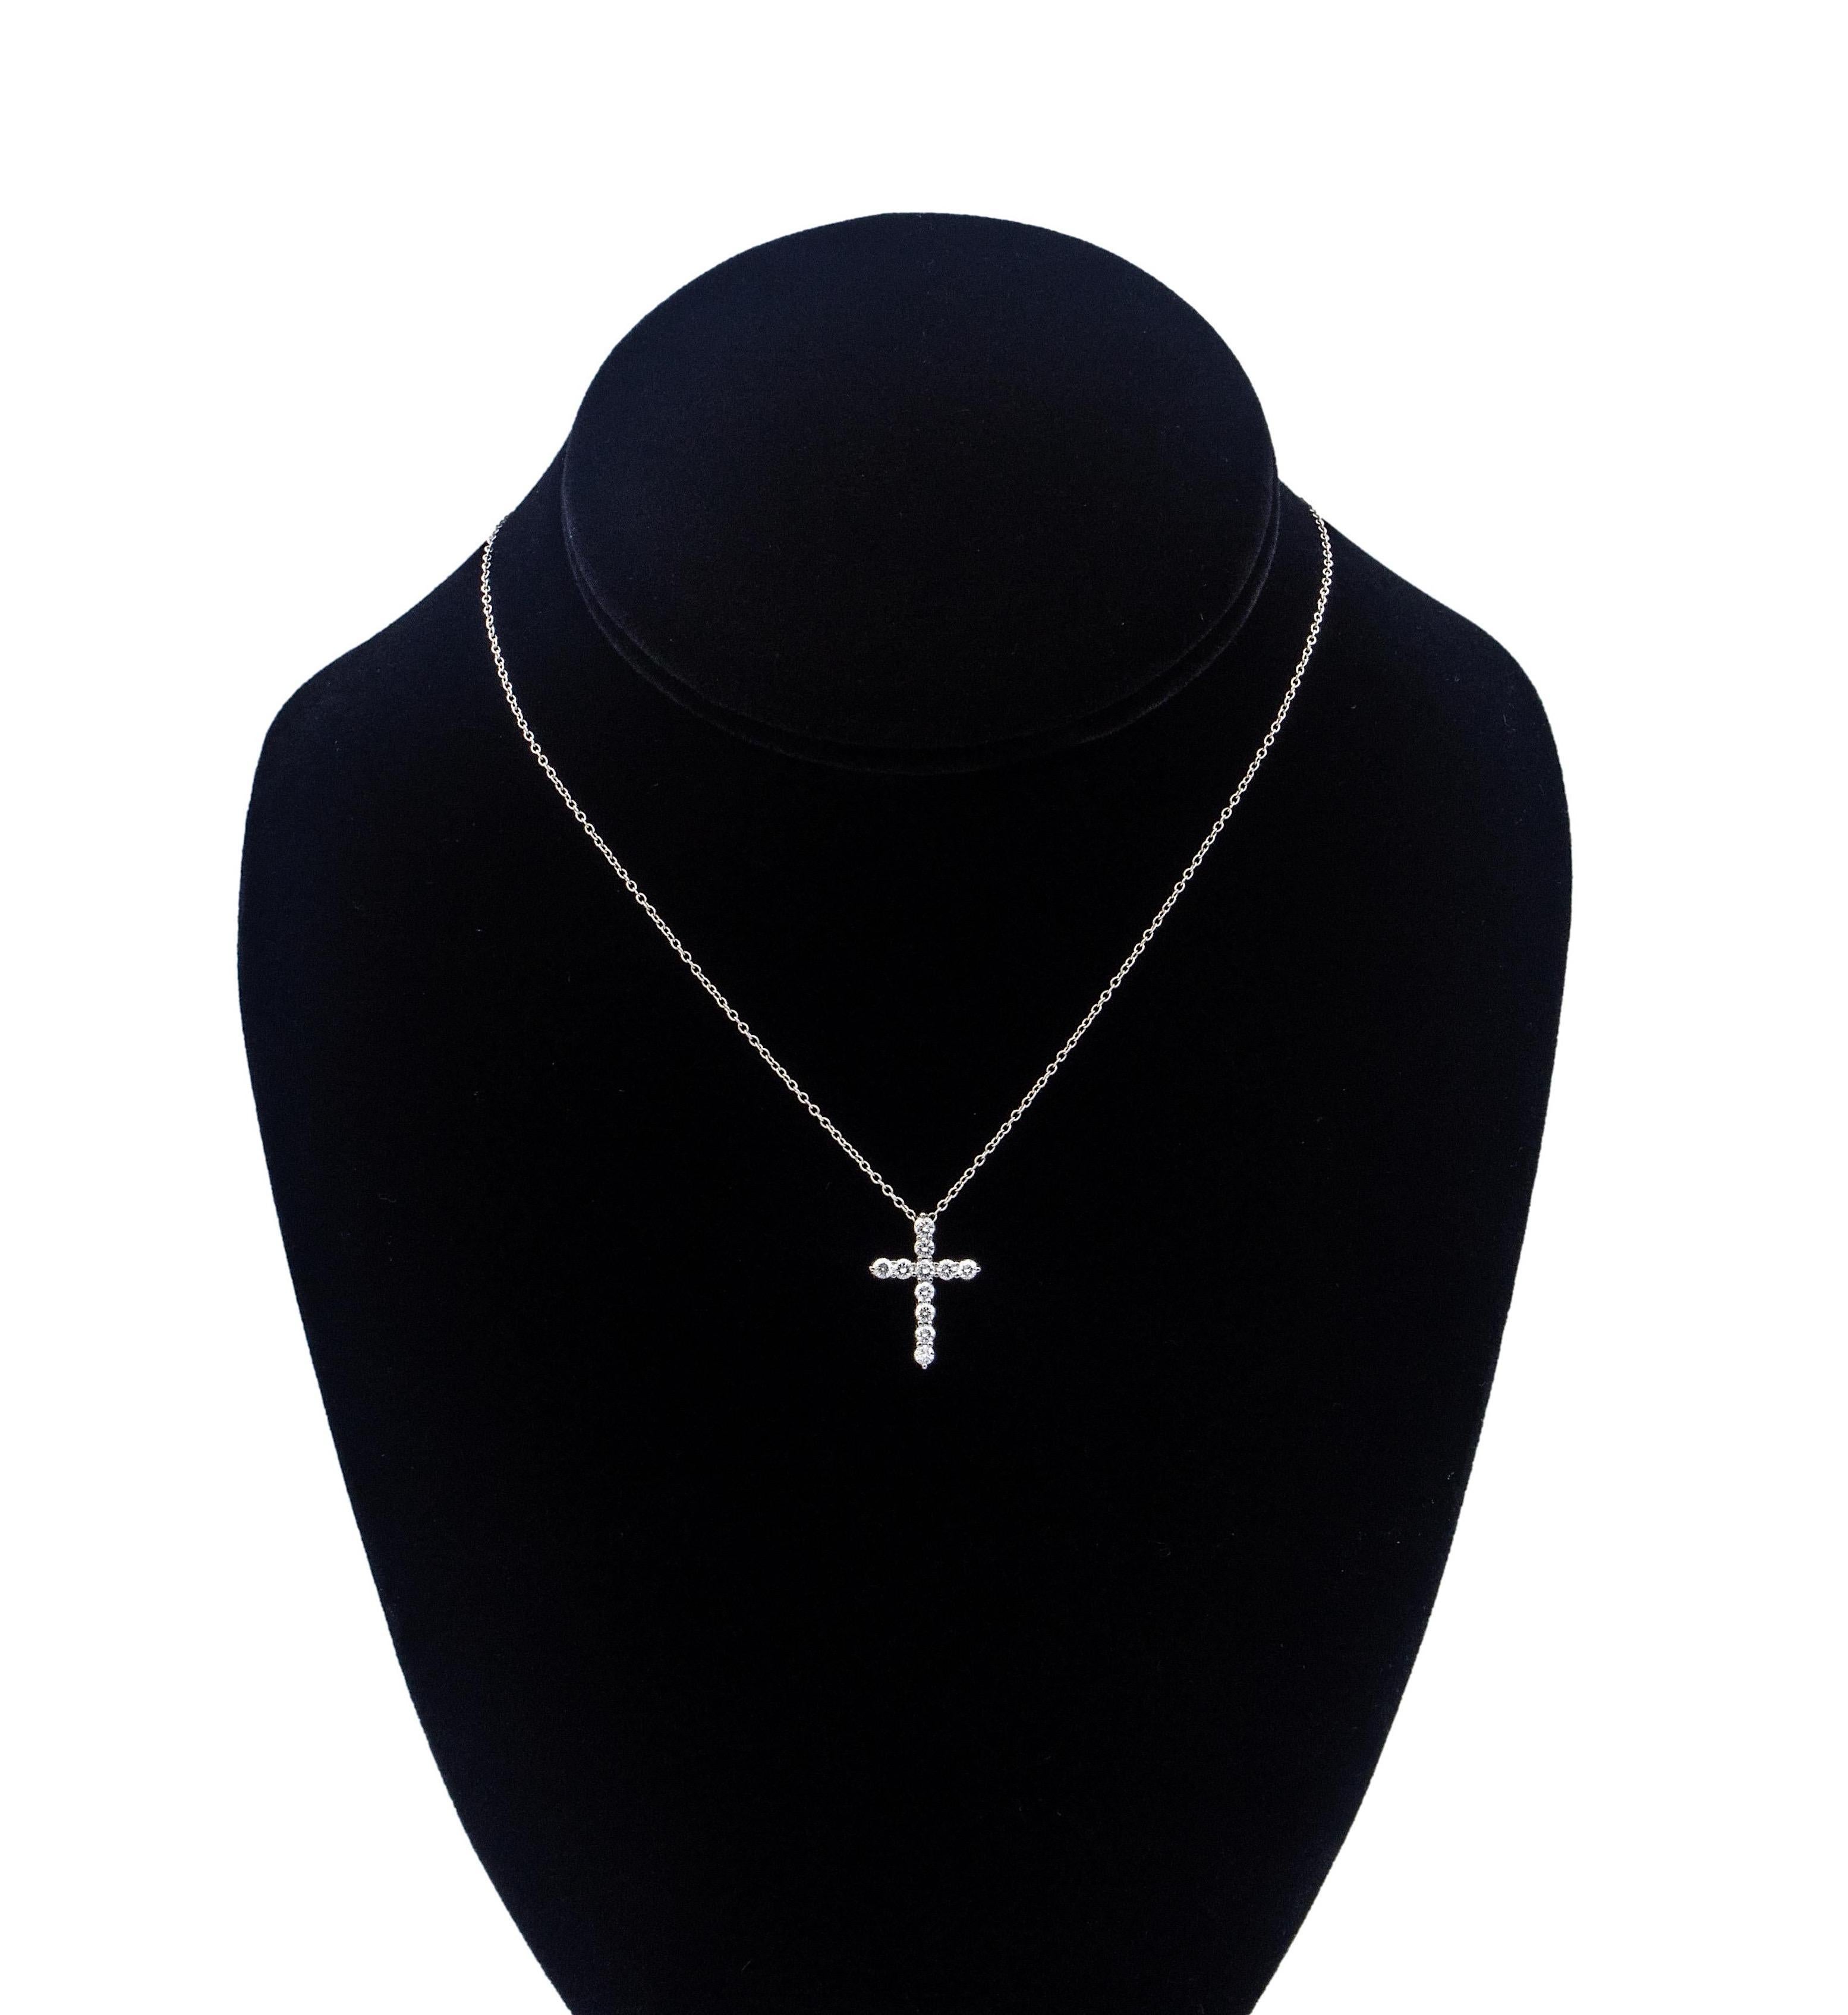 tiffany diamond cross necklace